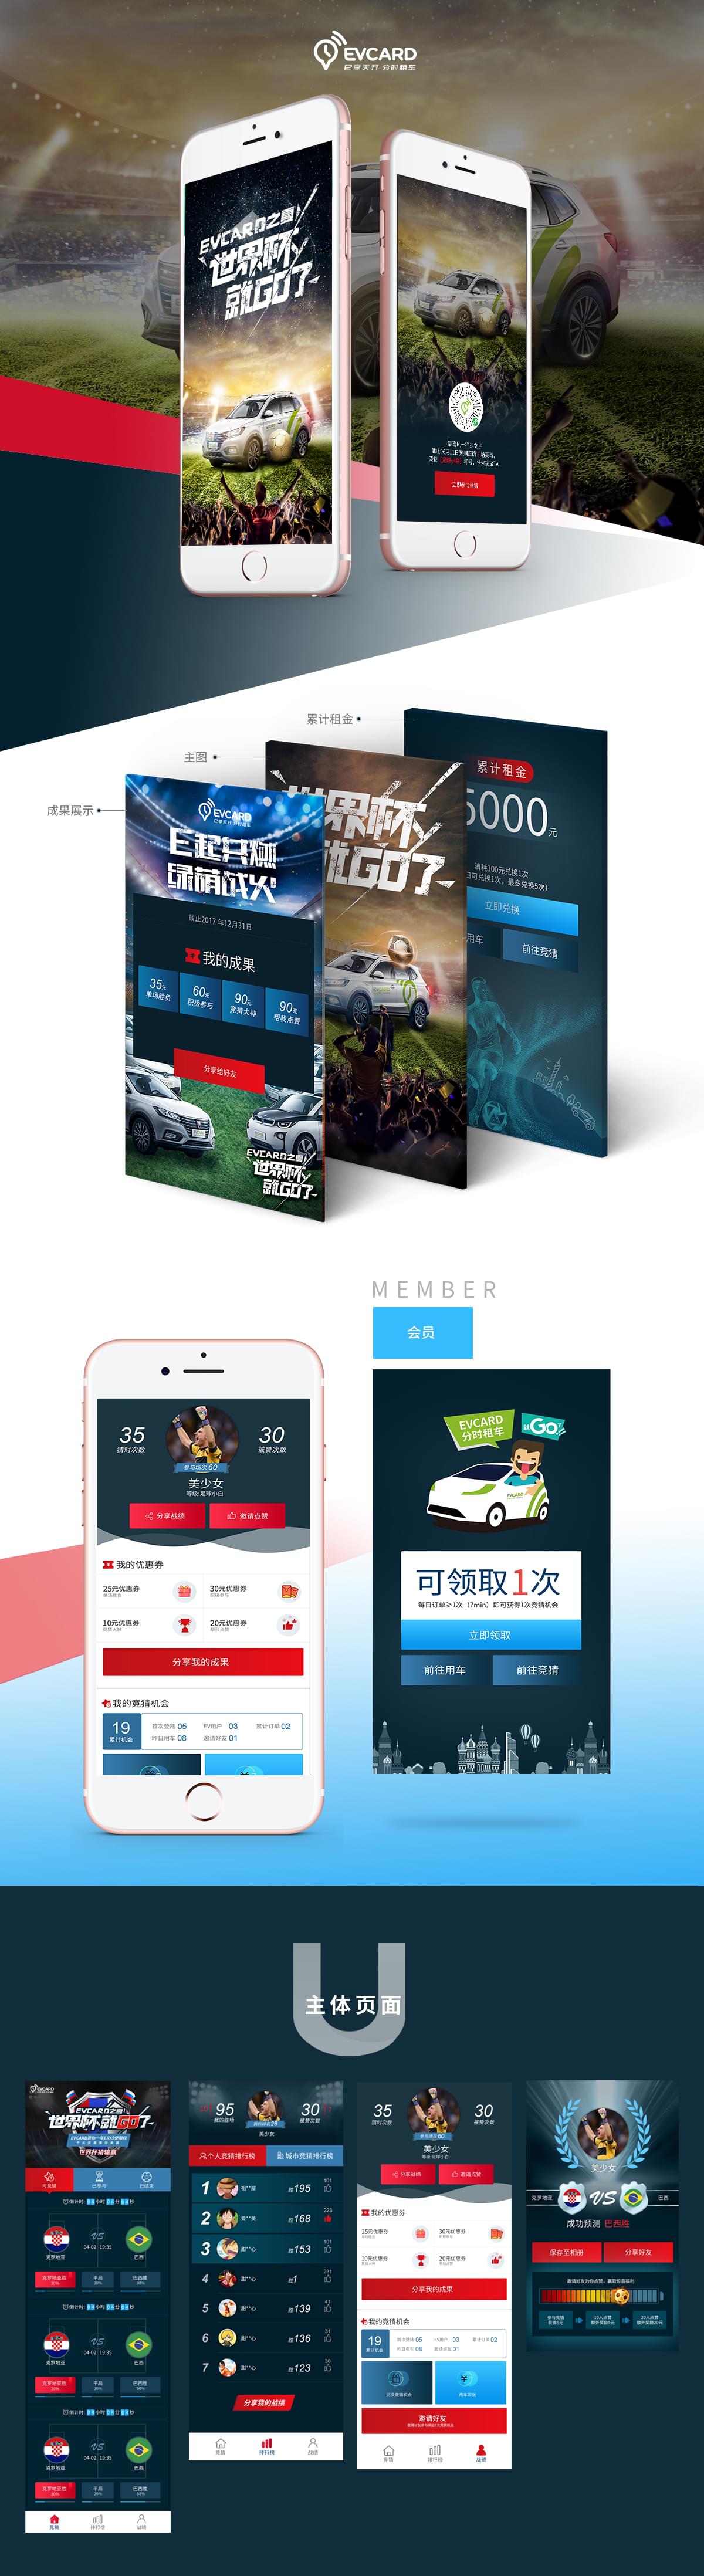 EVCARD世界杯竞猜小程序开发-新媒体营销,新媒体广告公司,上海网络营销,微信代运营,高端网站建设,网站建设公司